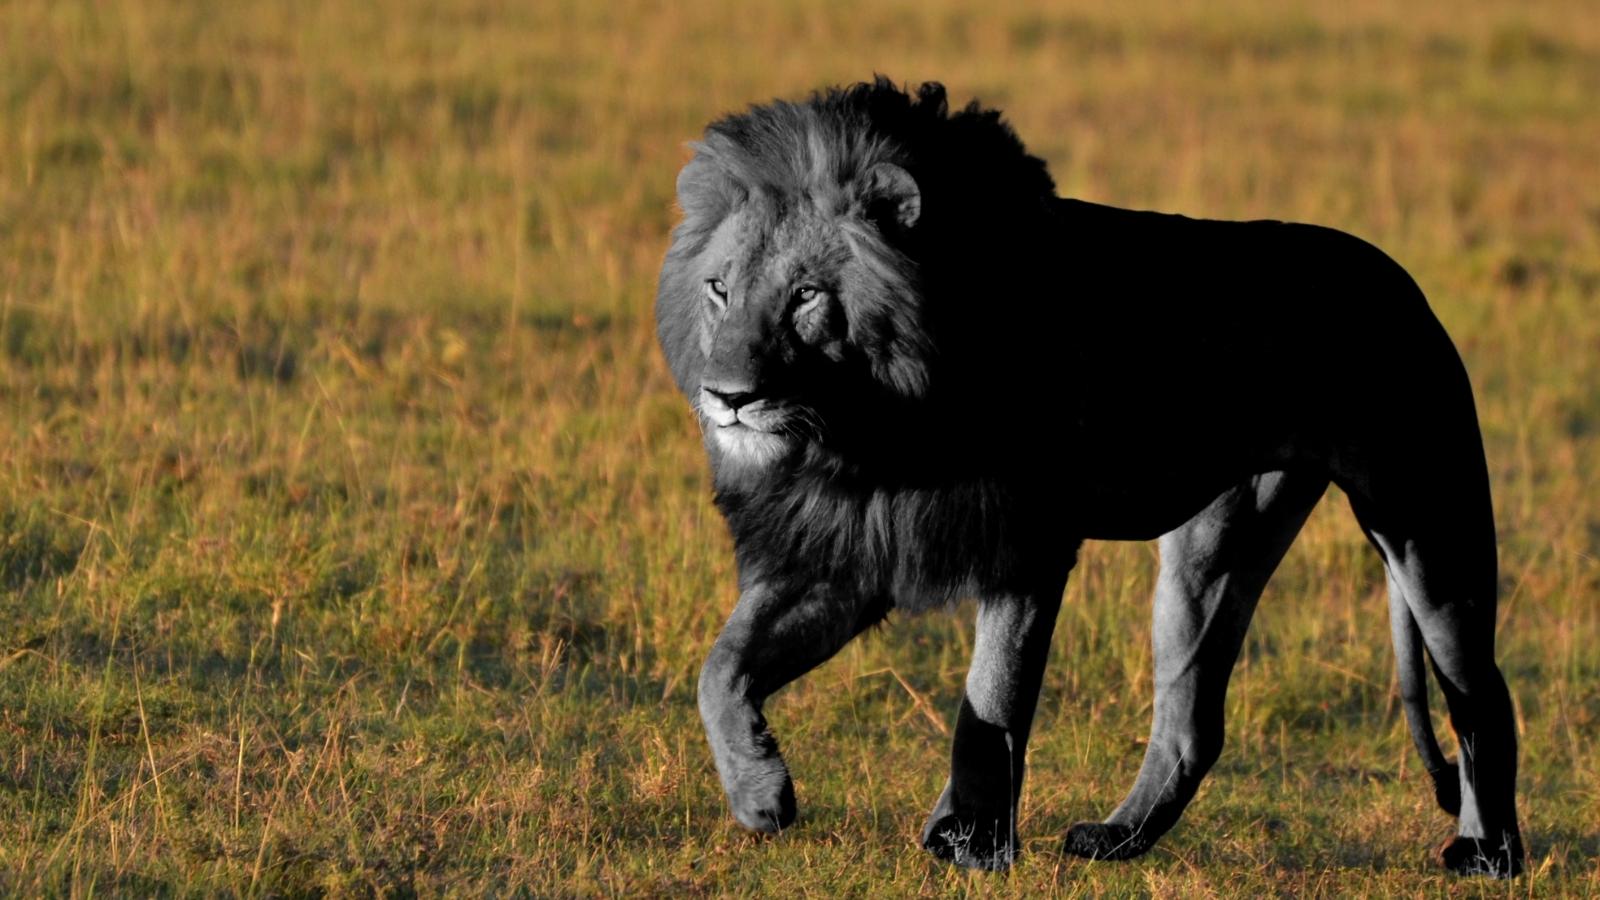 The Black Lion - Understanding Your Dreams - Kaya